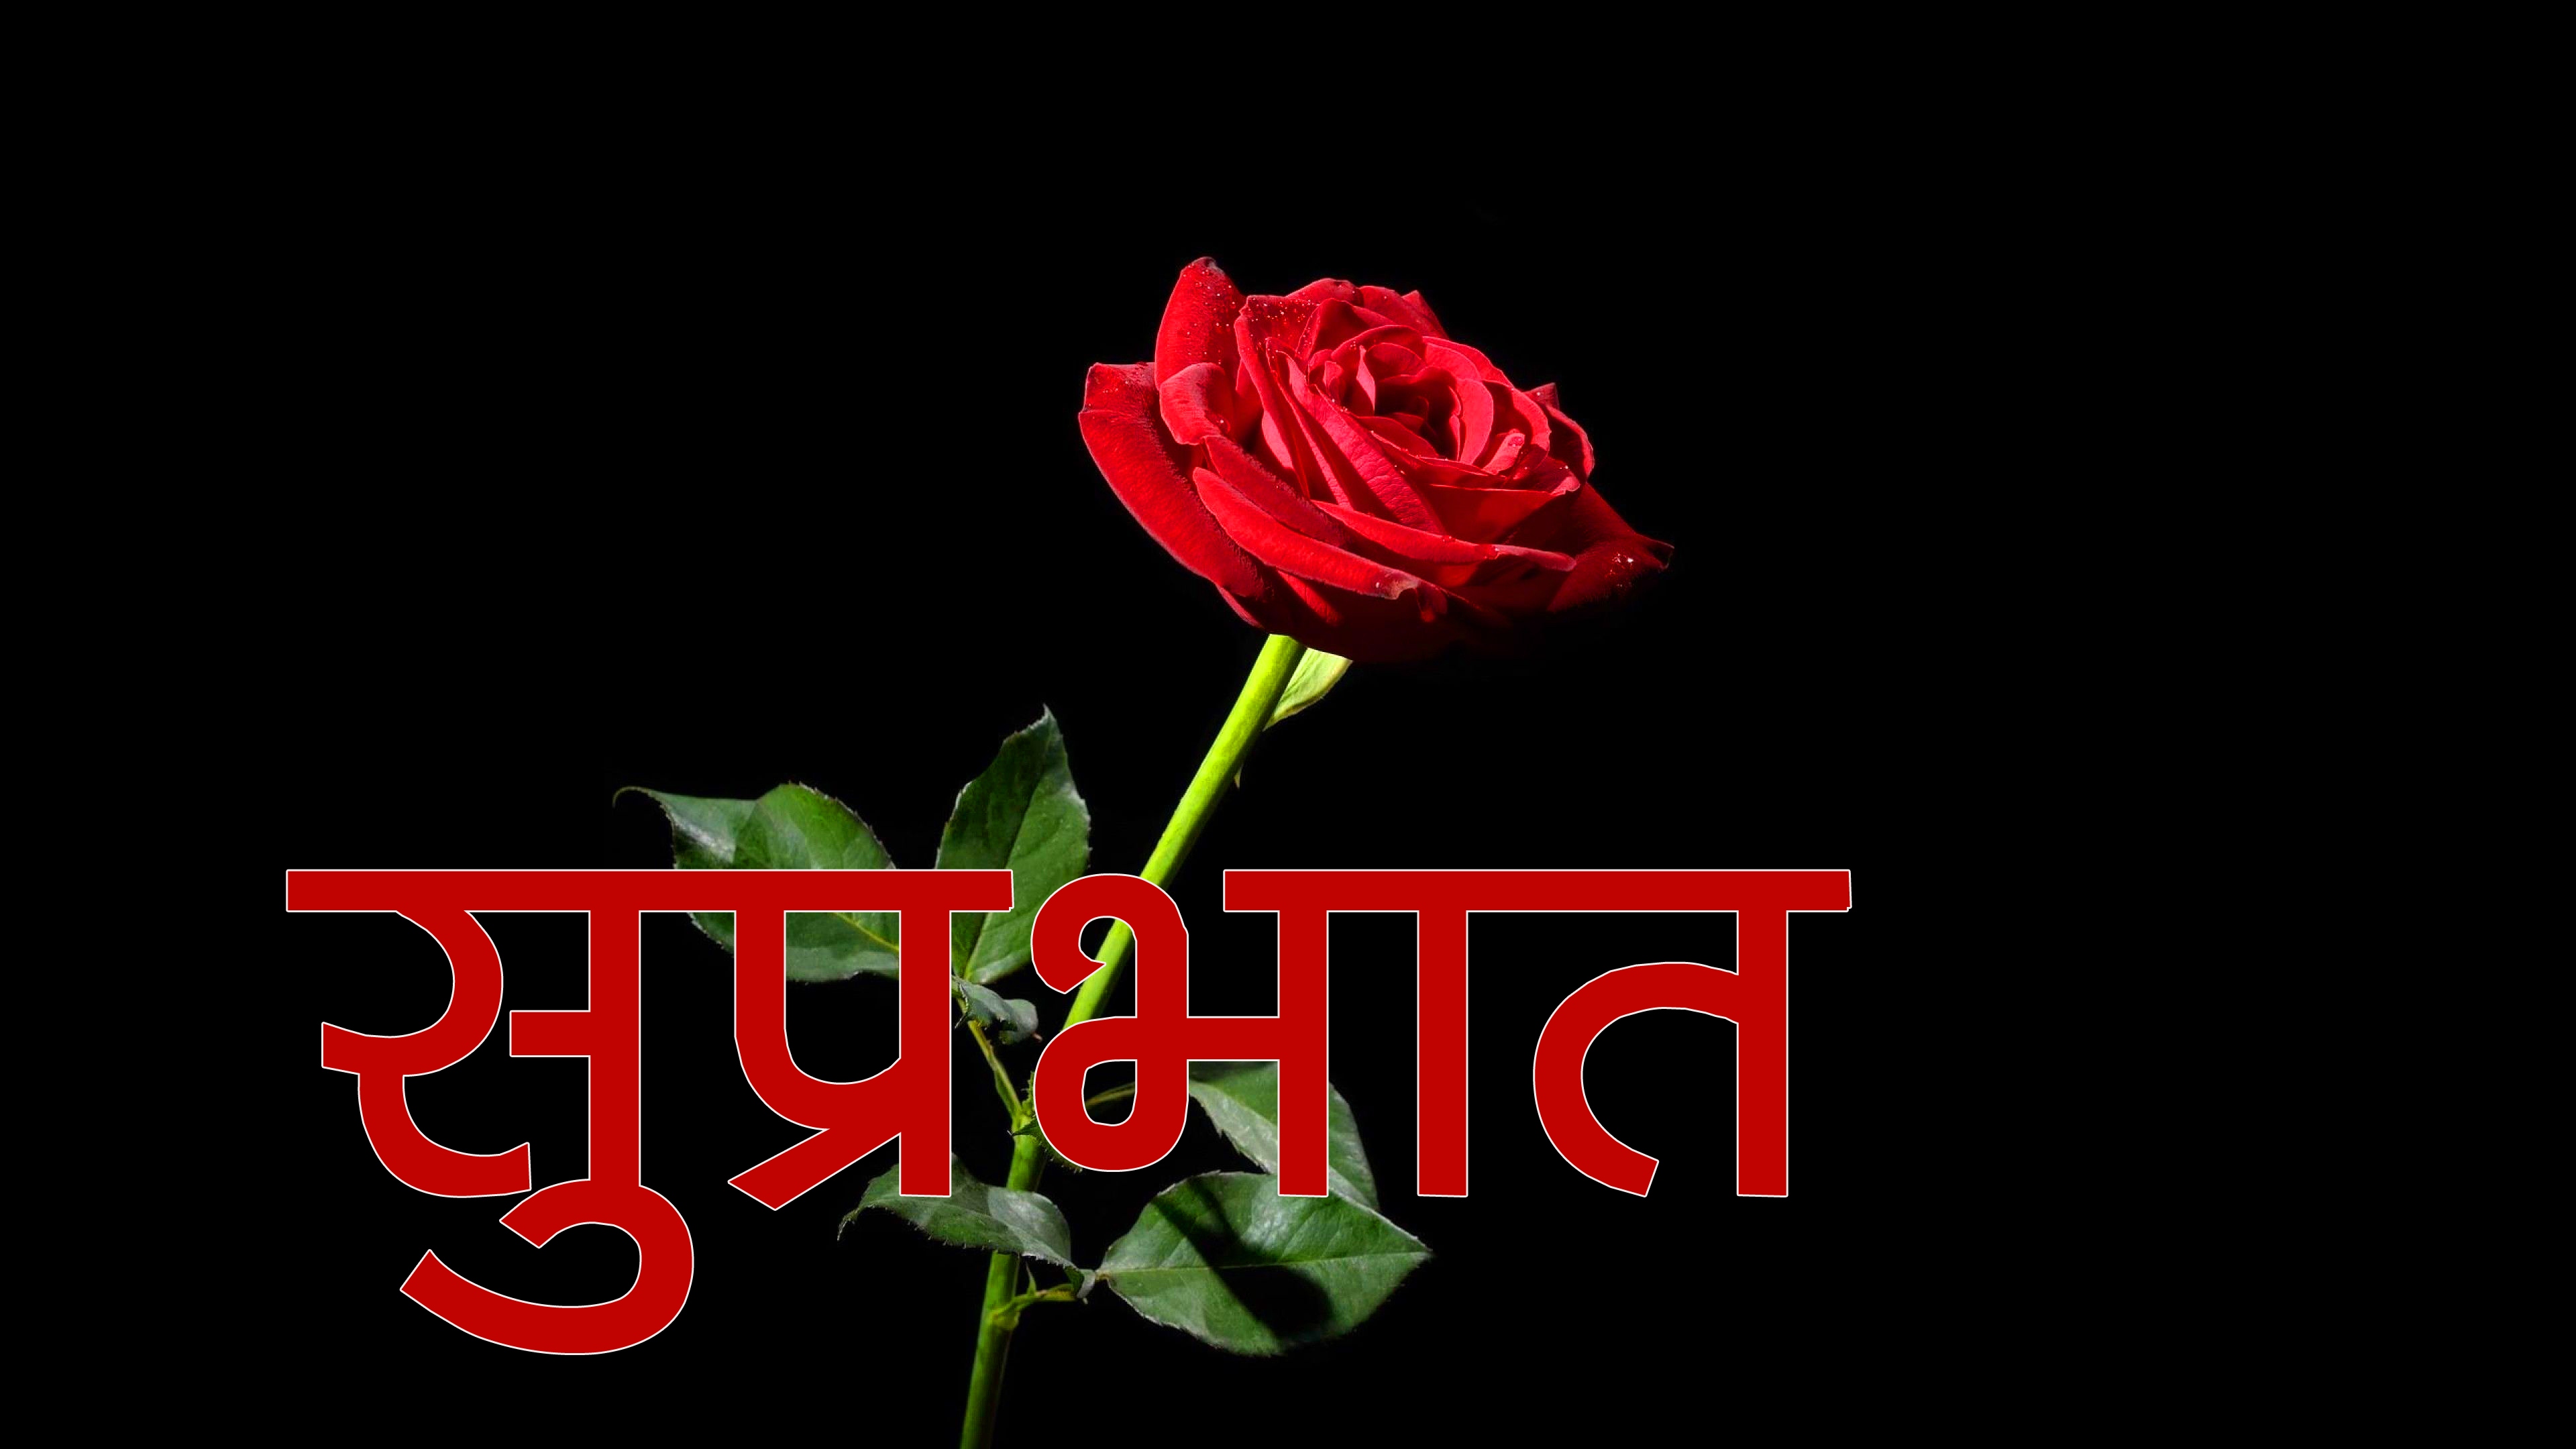 Red Rose Suprabhat Images Pics Download 